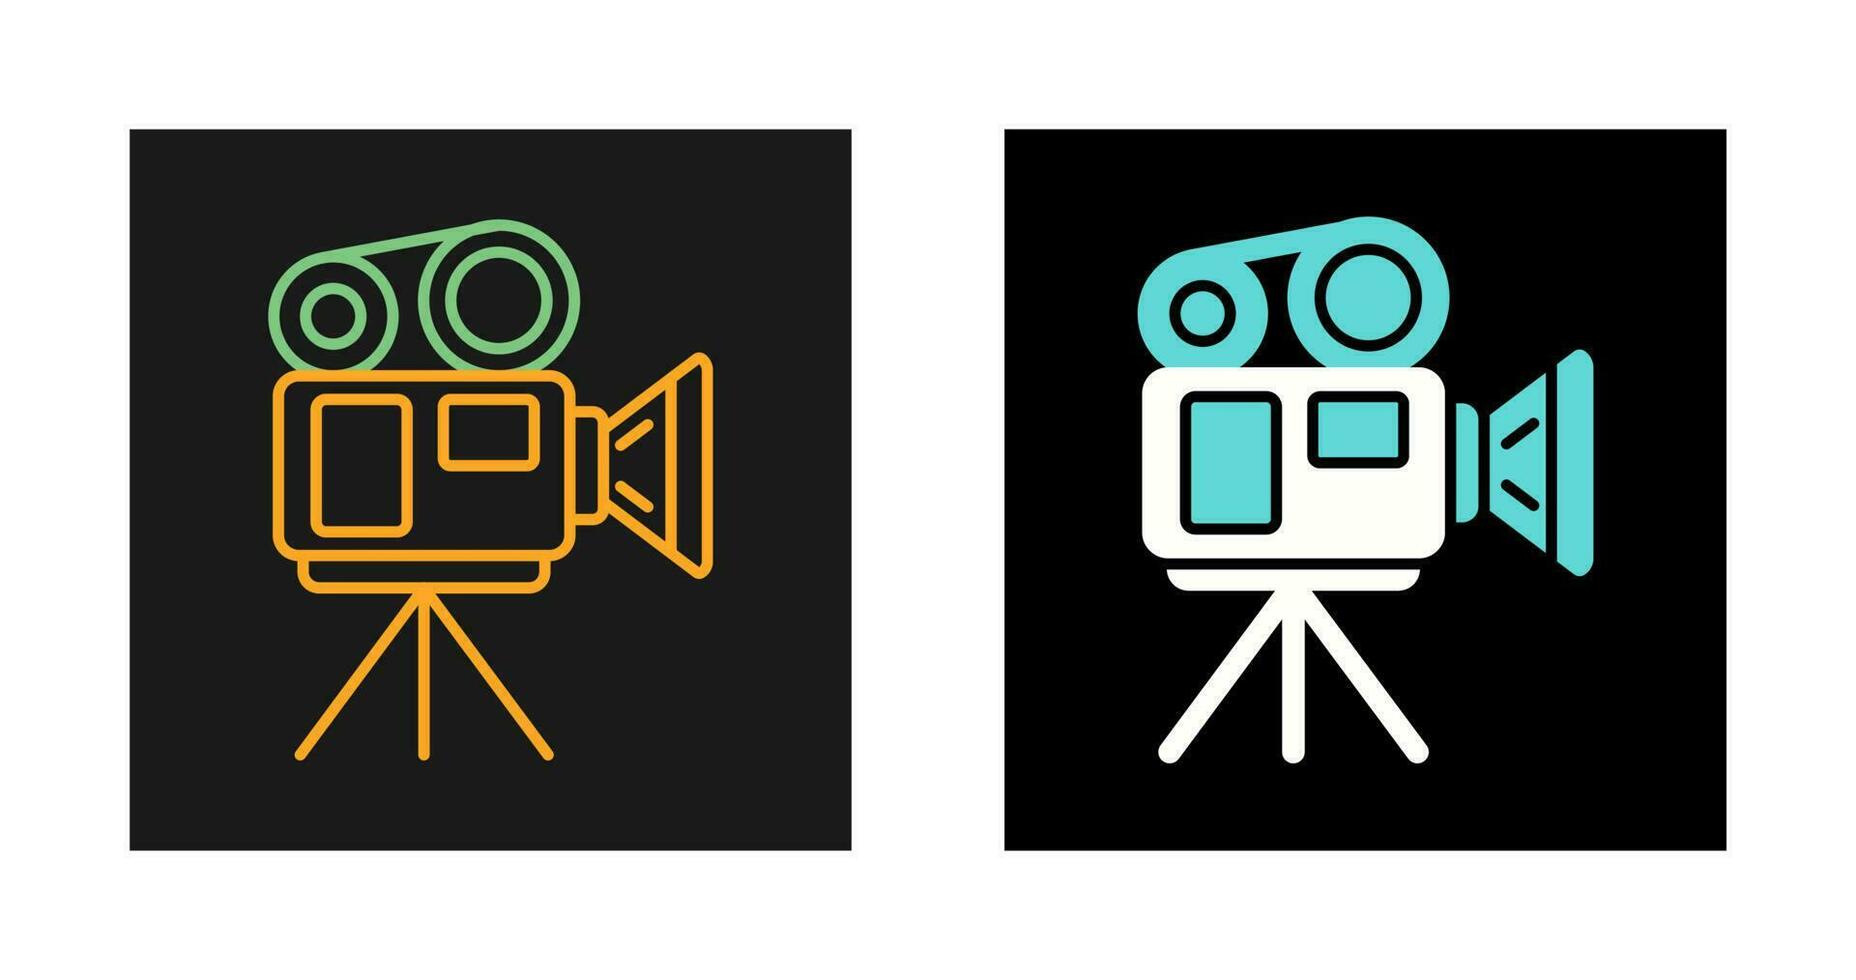 videocamera vector pictogram